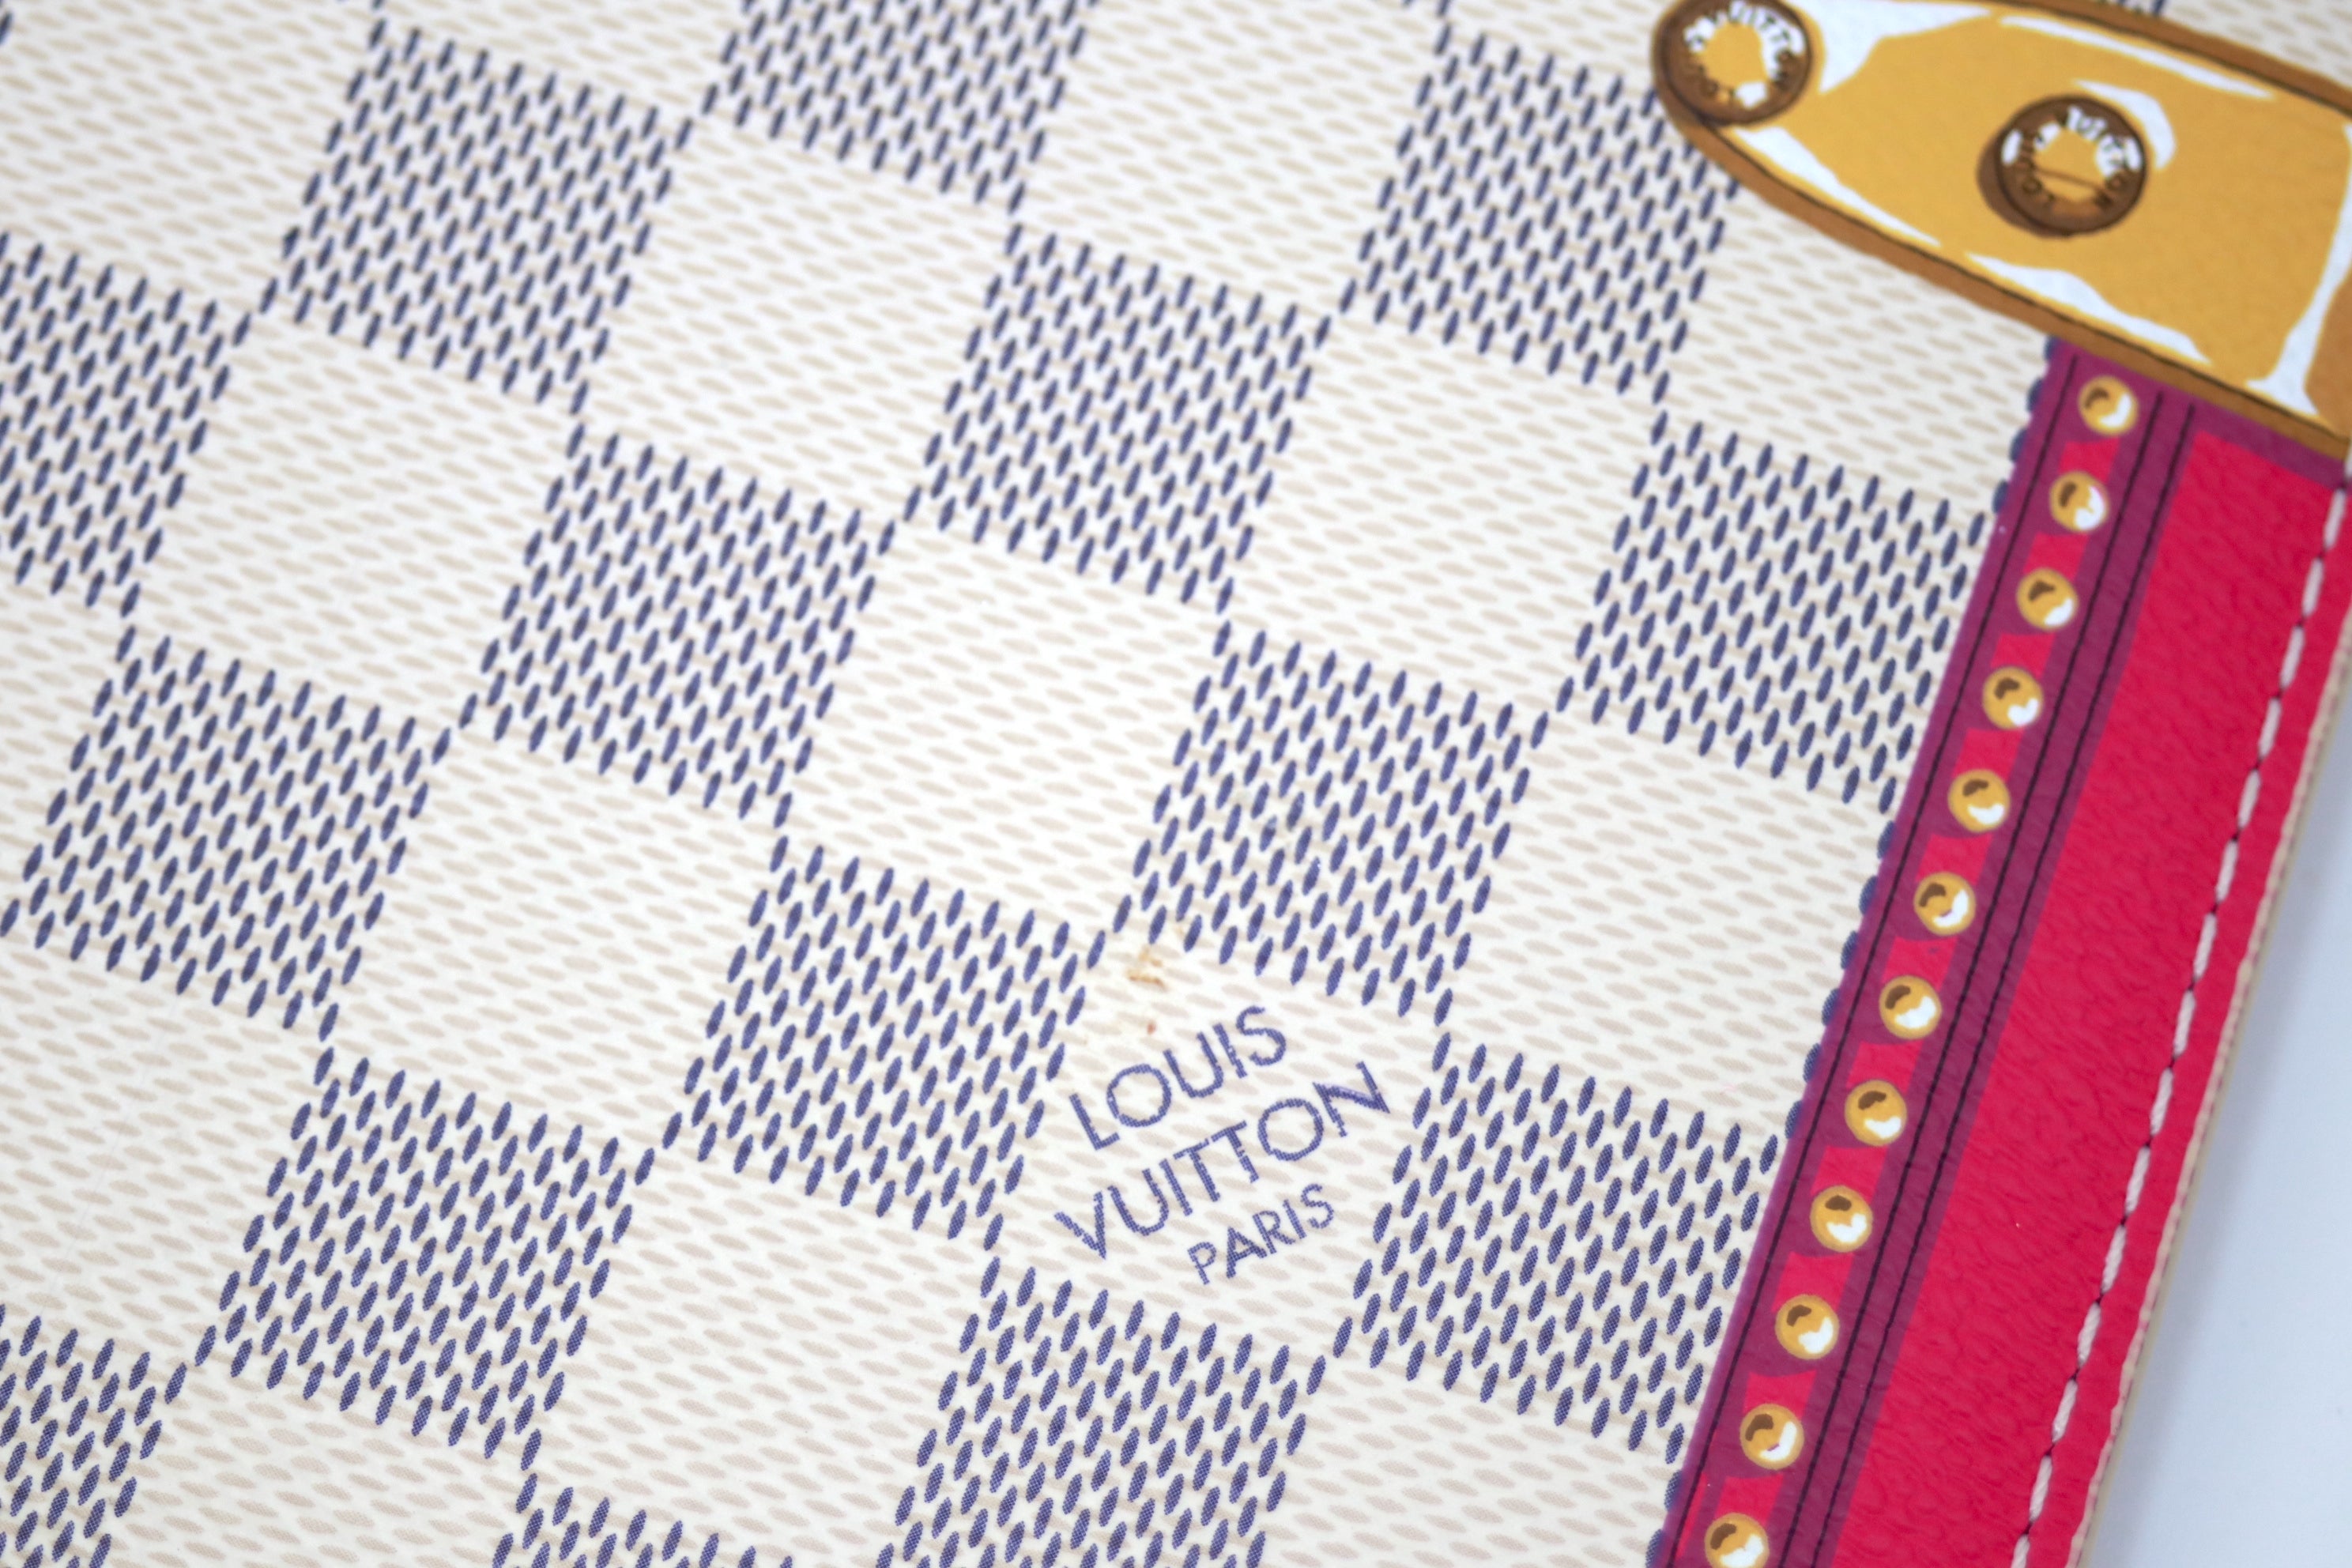 Louis Vuitton Summer Trunks Neverfull Mm. Tradesy / Poshmark @taratucci